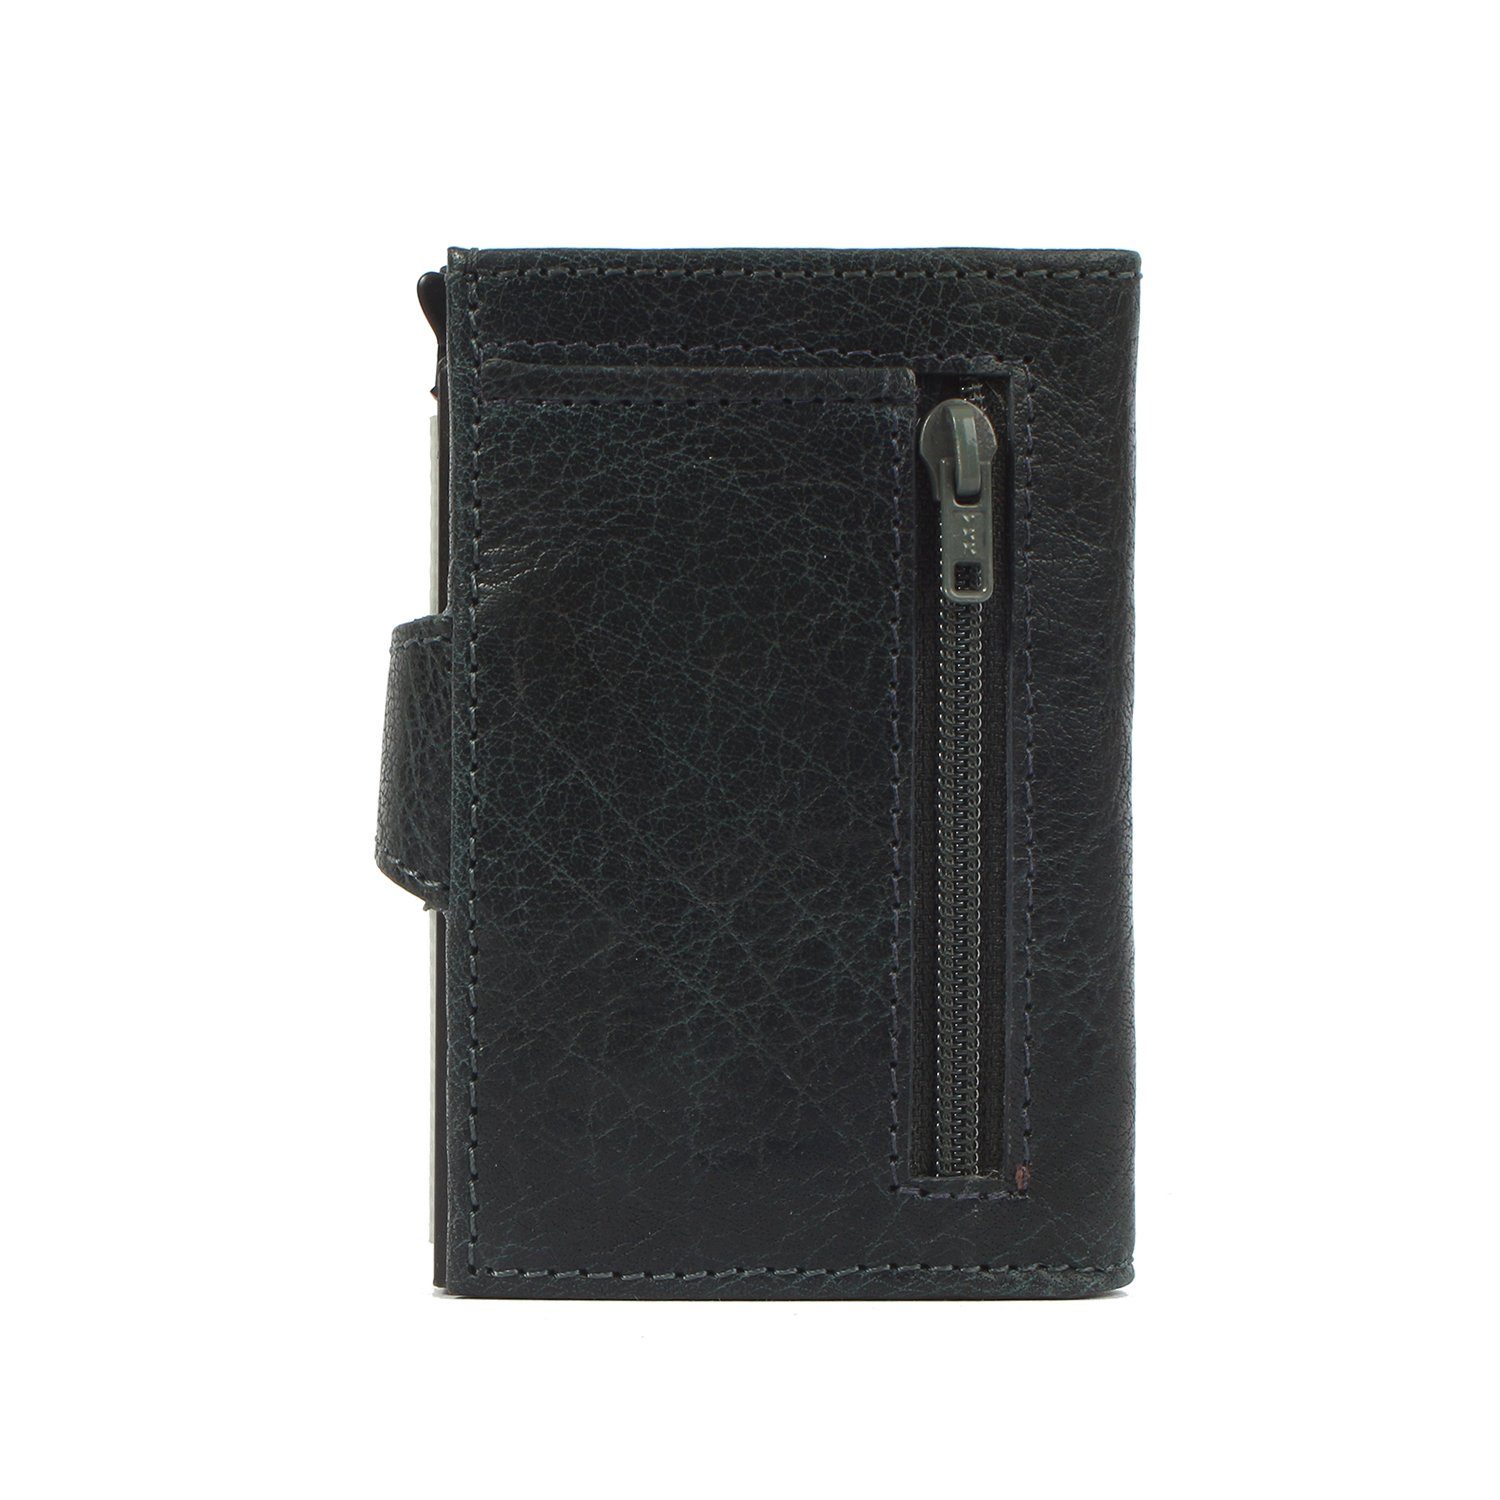 Margelisch Mini Geldbörse noonyu single Kreditkartenbörse Upcycling leather, aus steelblue Leder